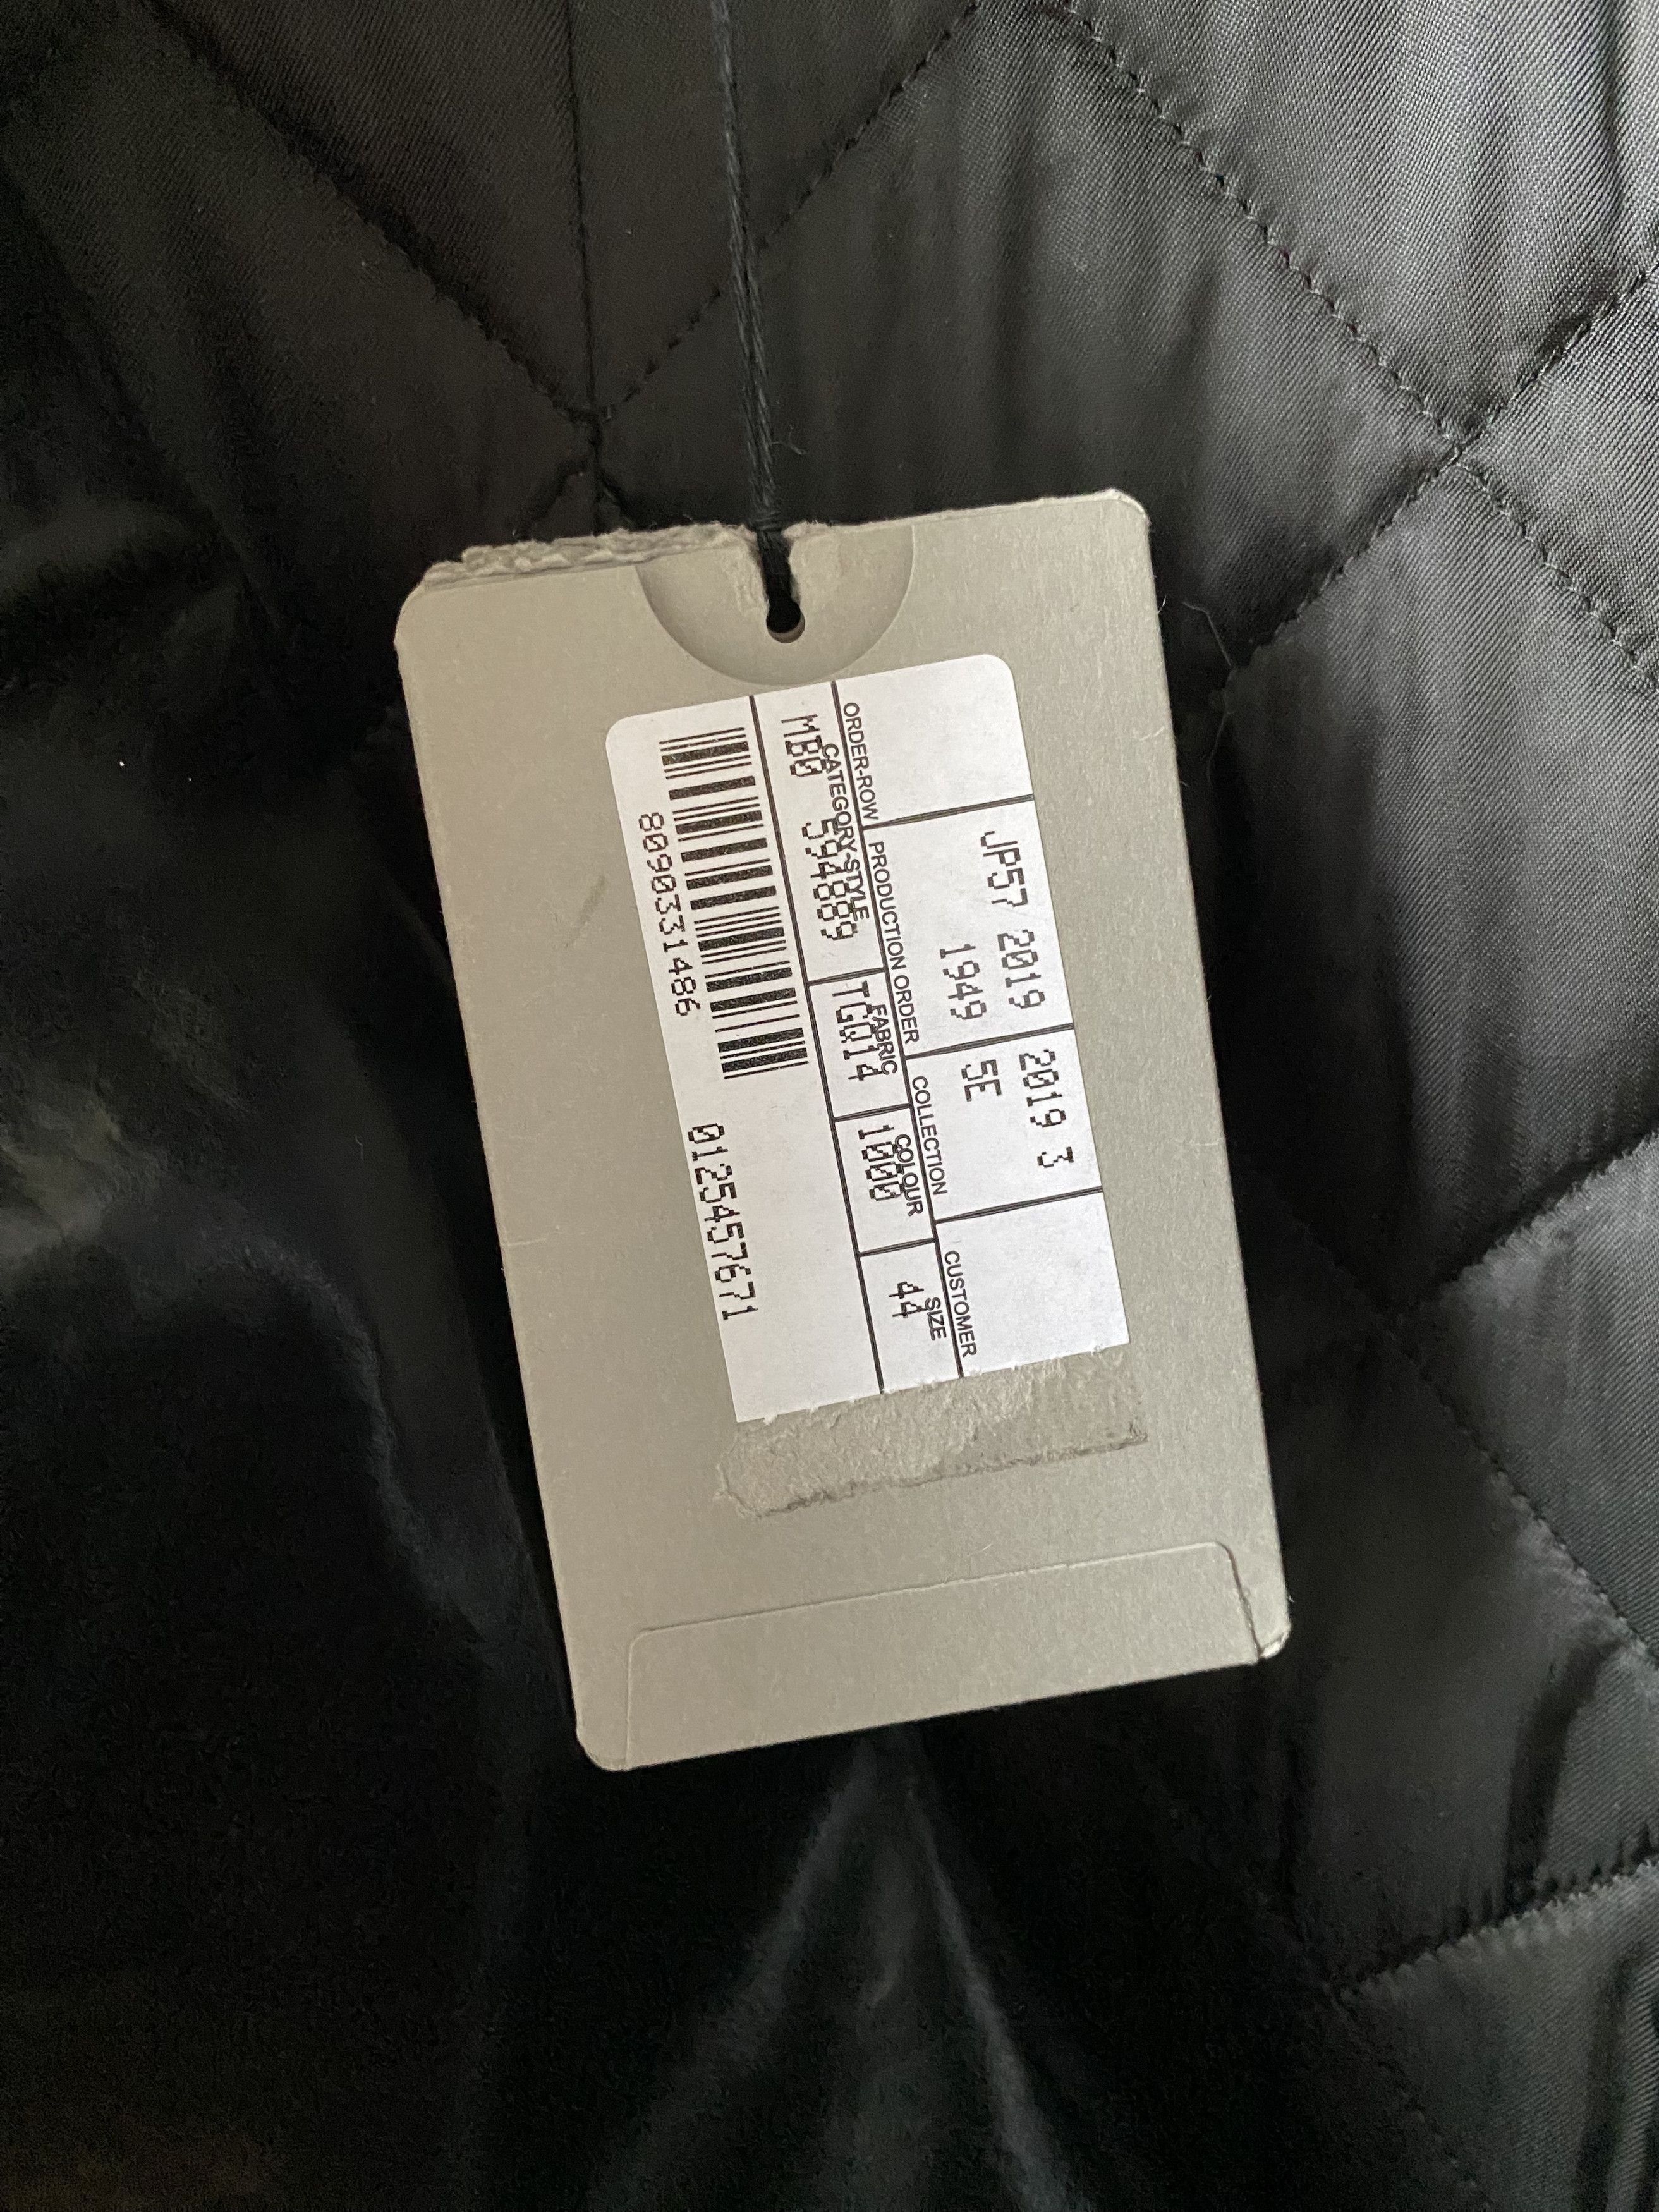 Balenciaga *FINAL DROP* Incognito Trench Coat Size US S / EU 44-46 / 1 - 9 Preview